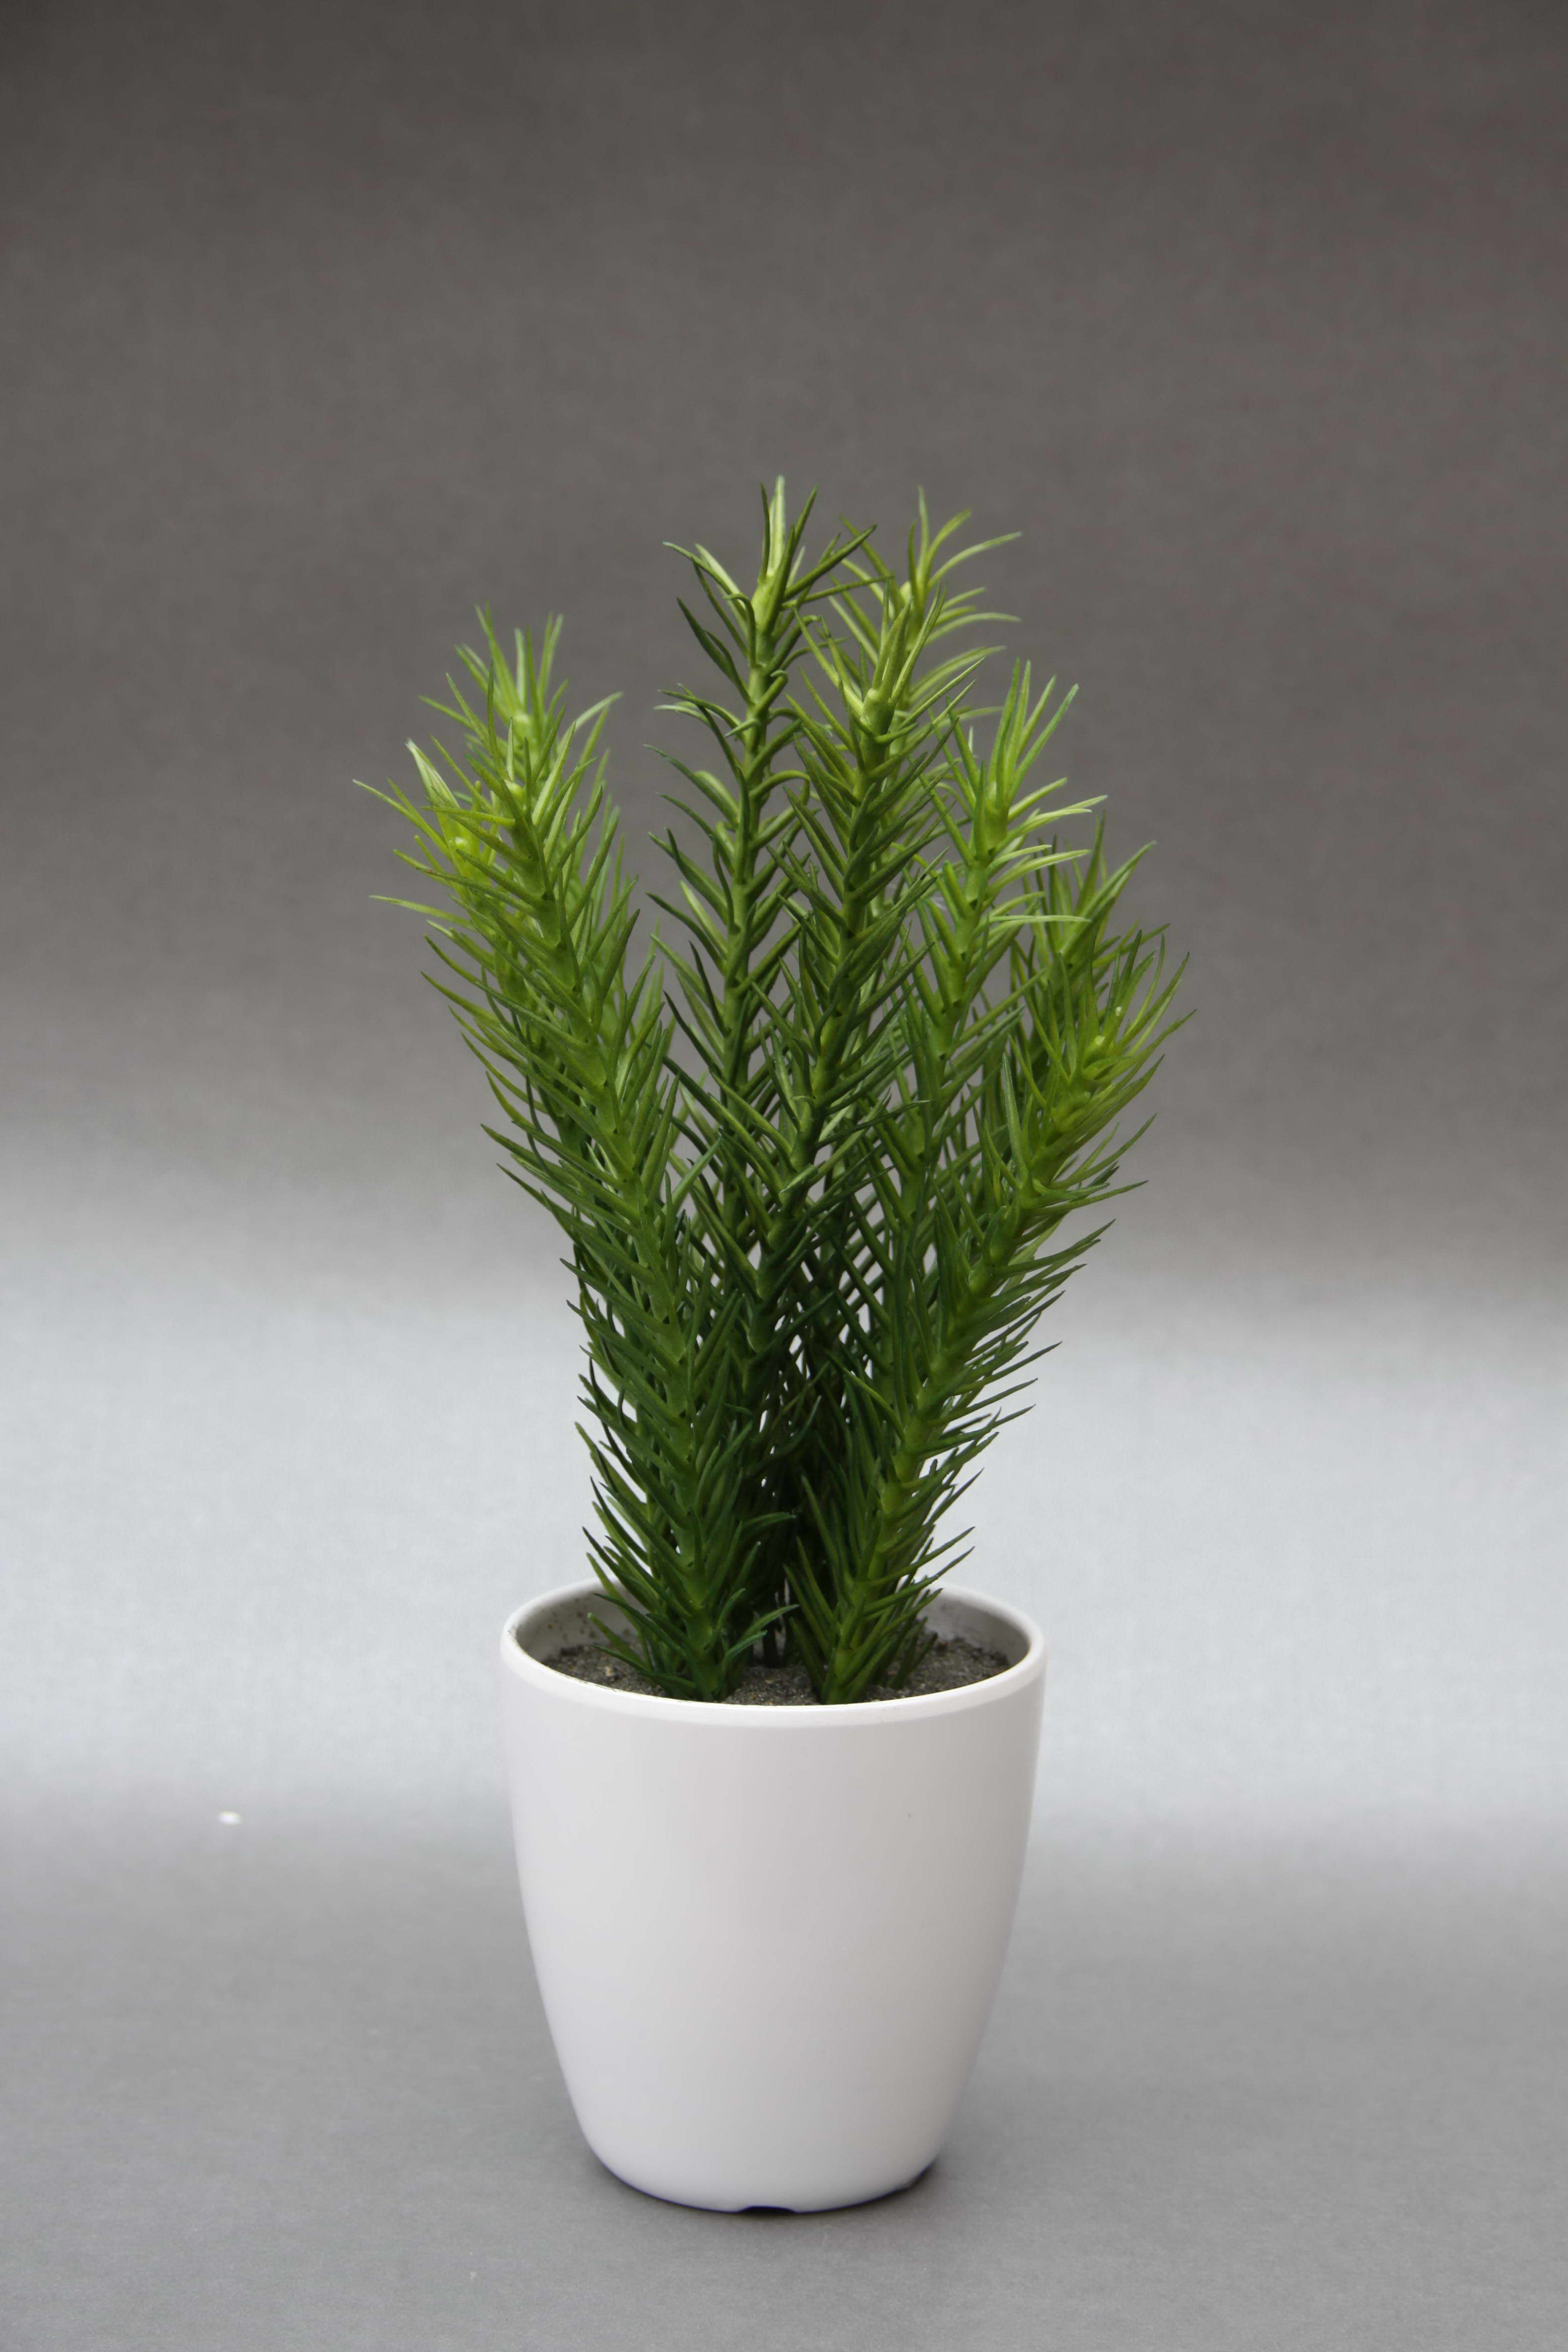 Western plastic pine needle grass simulation plant simulation plant home decoration1